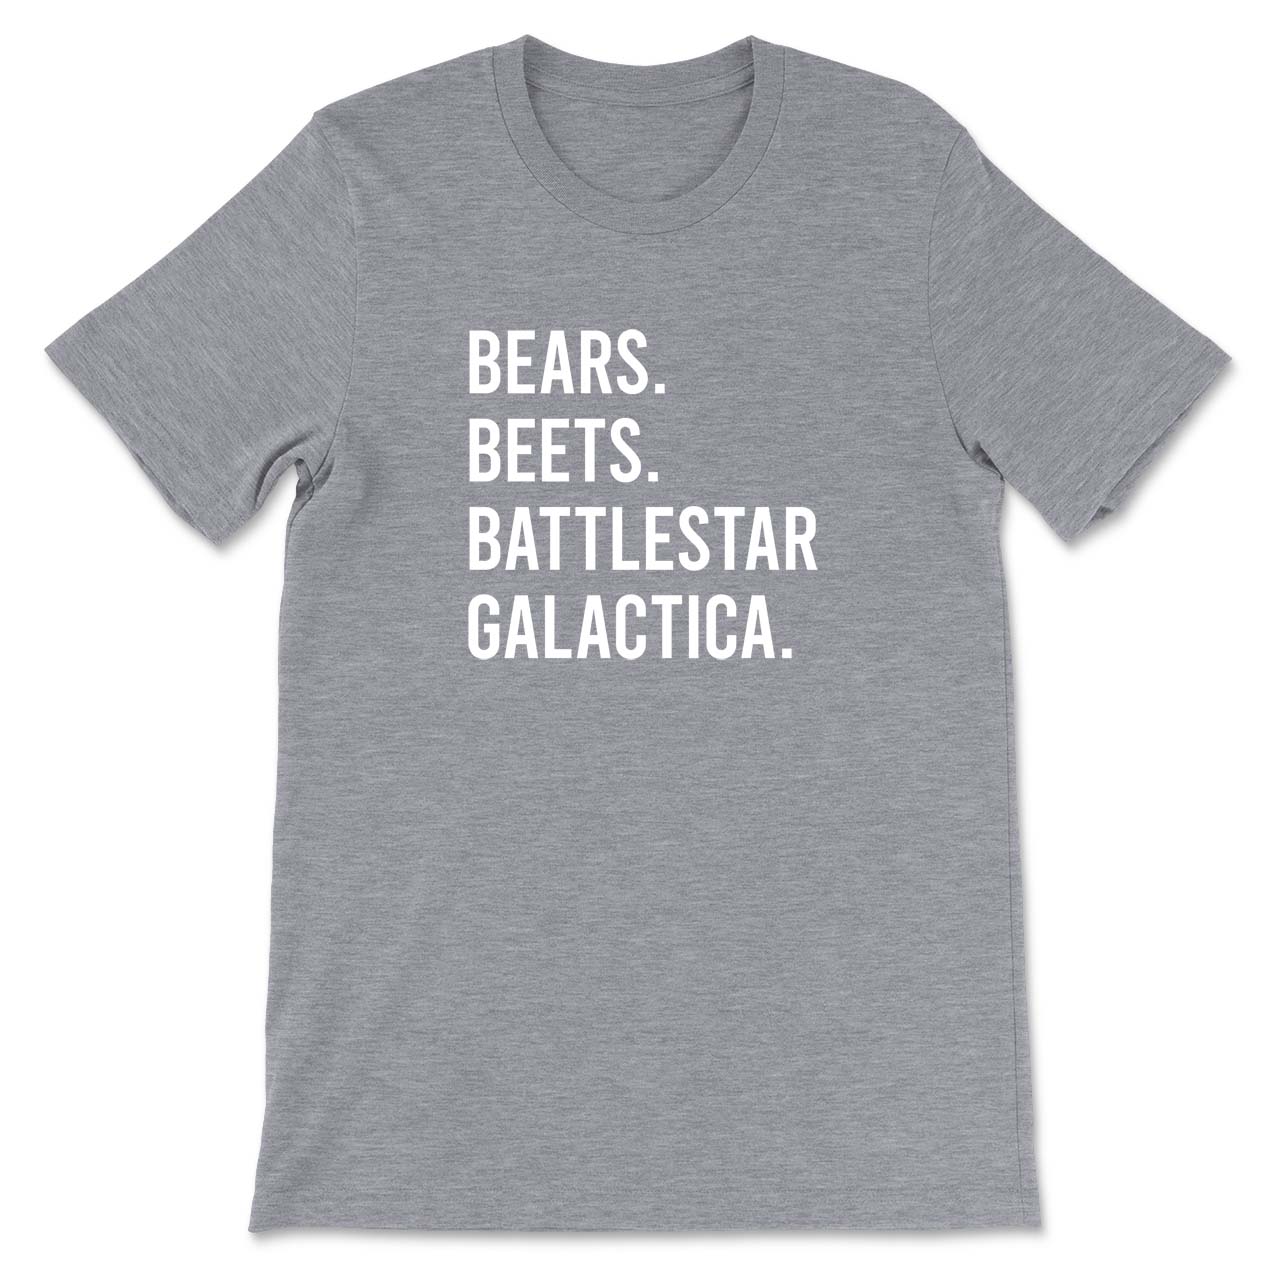 Daydream Tees Bears. Beets. Battlestar Galactica.